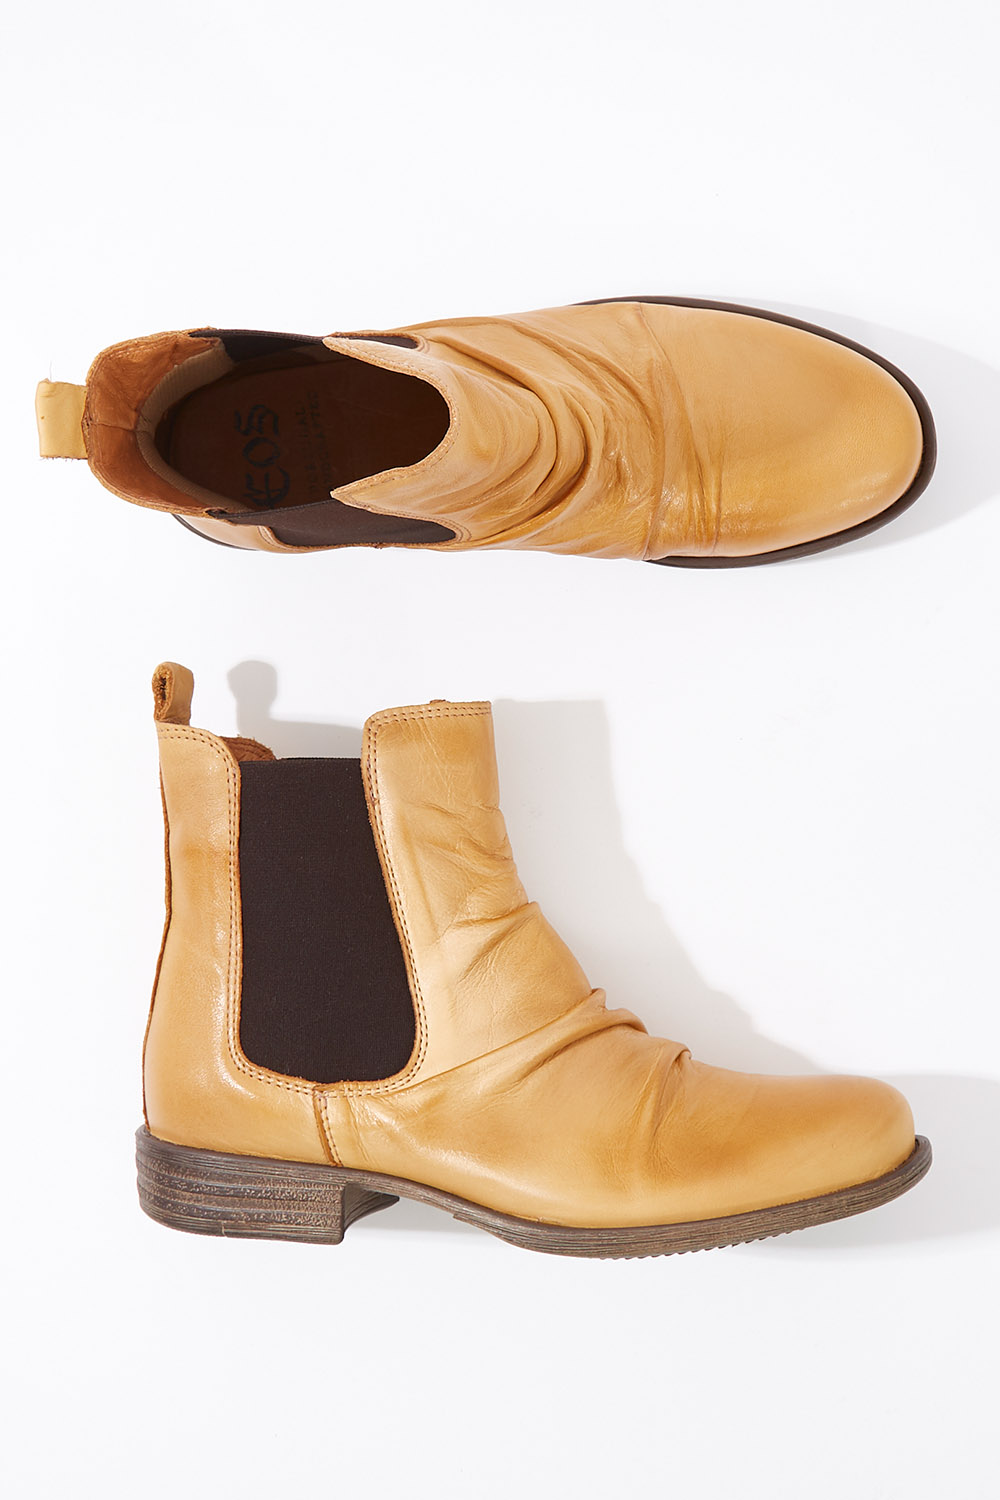 eos boots sale